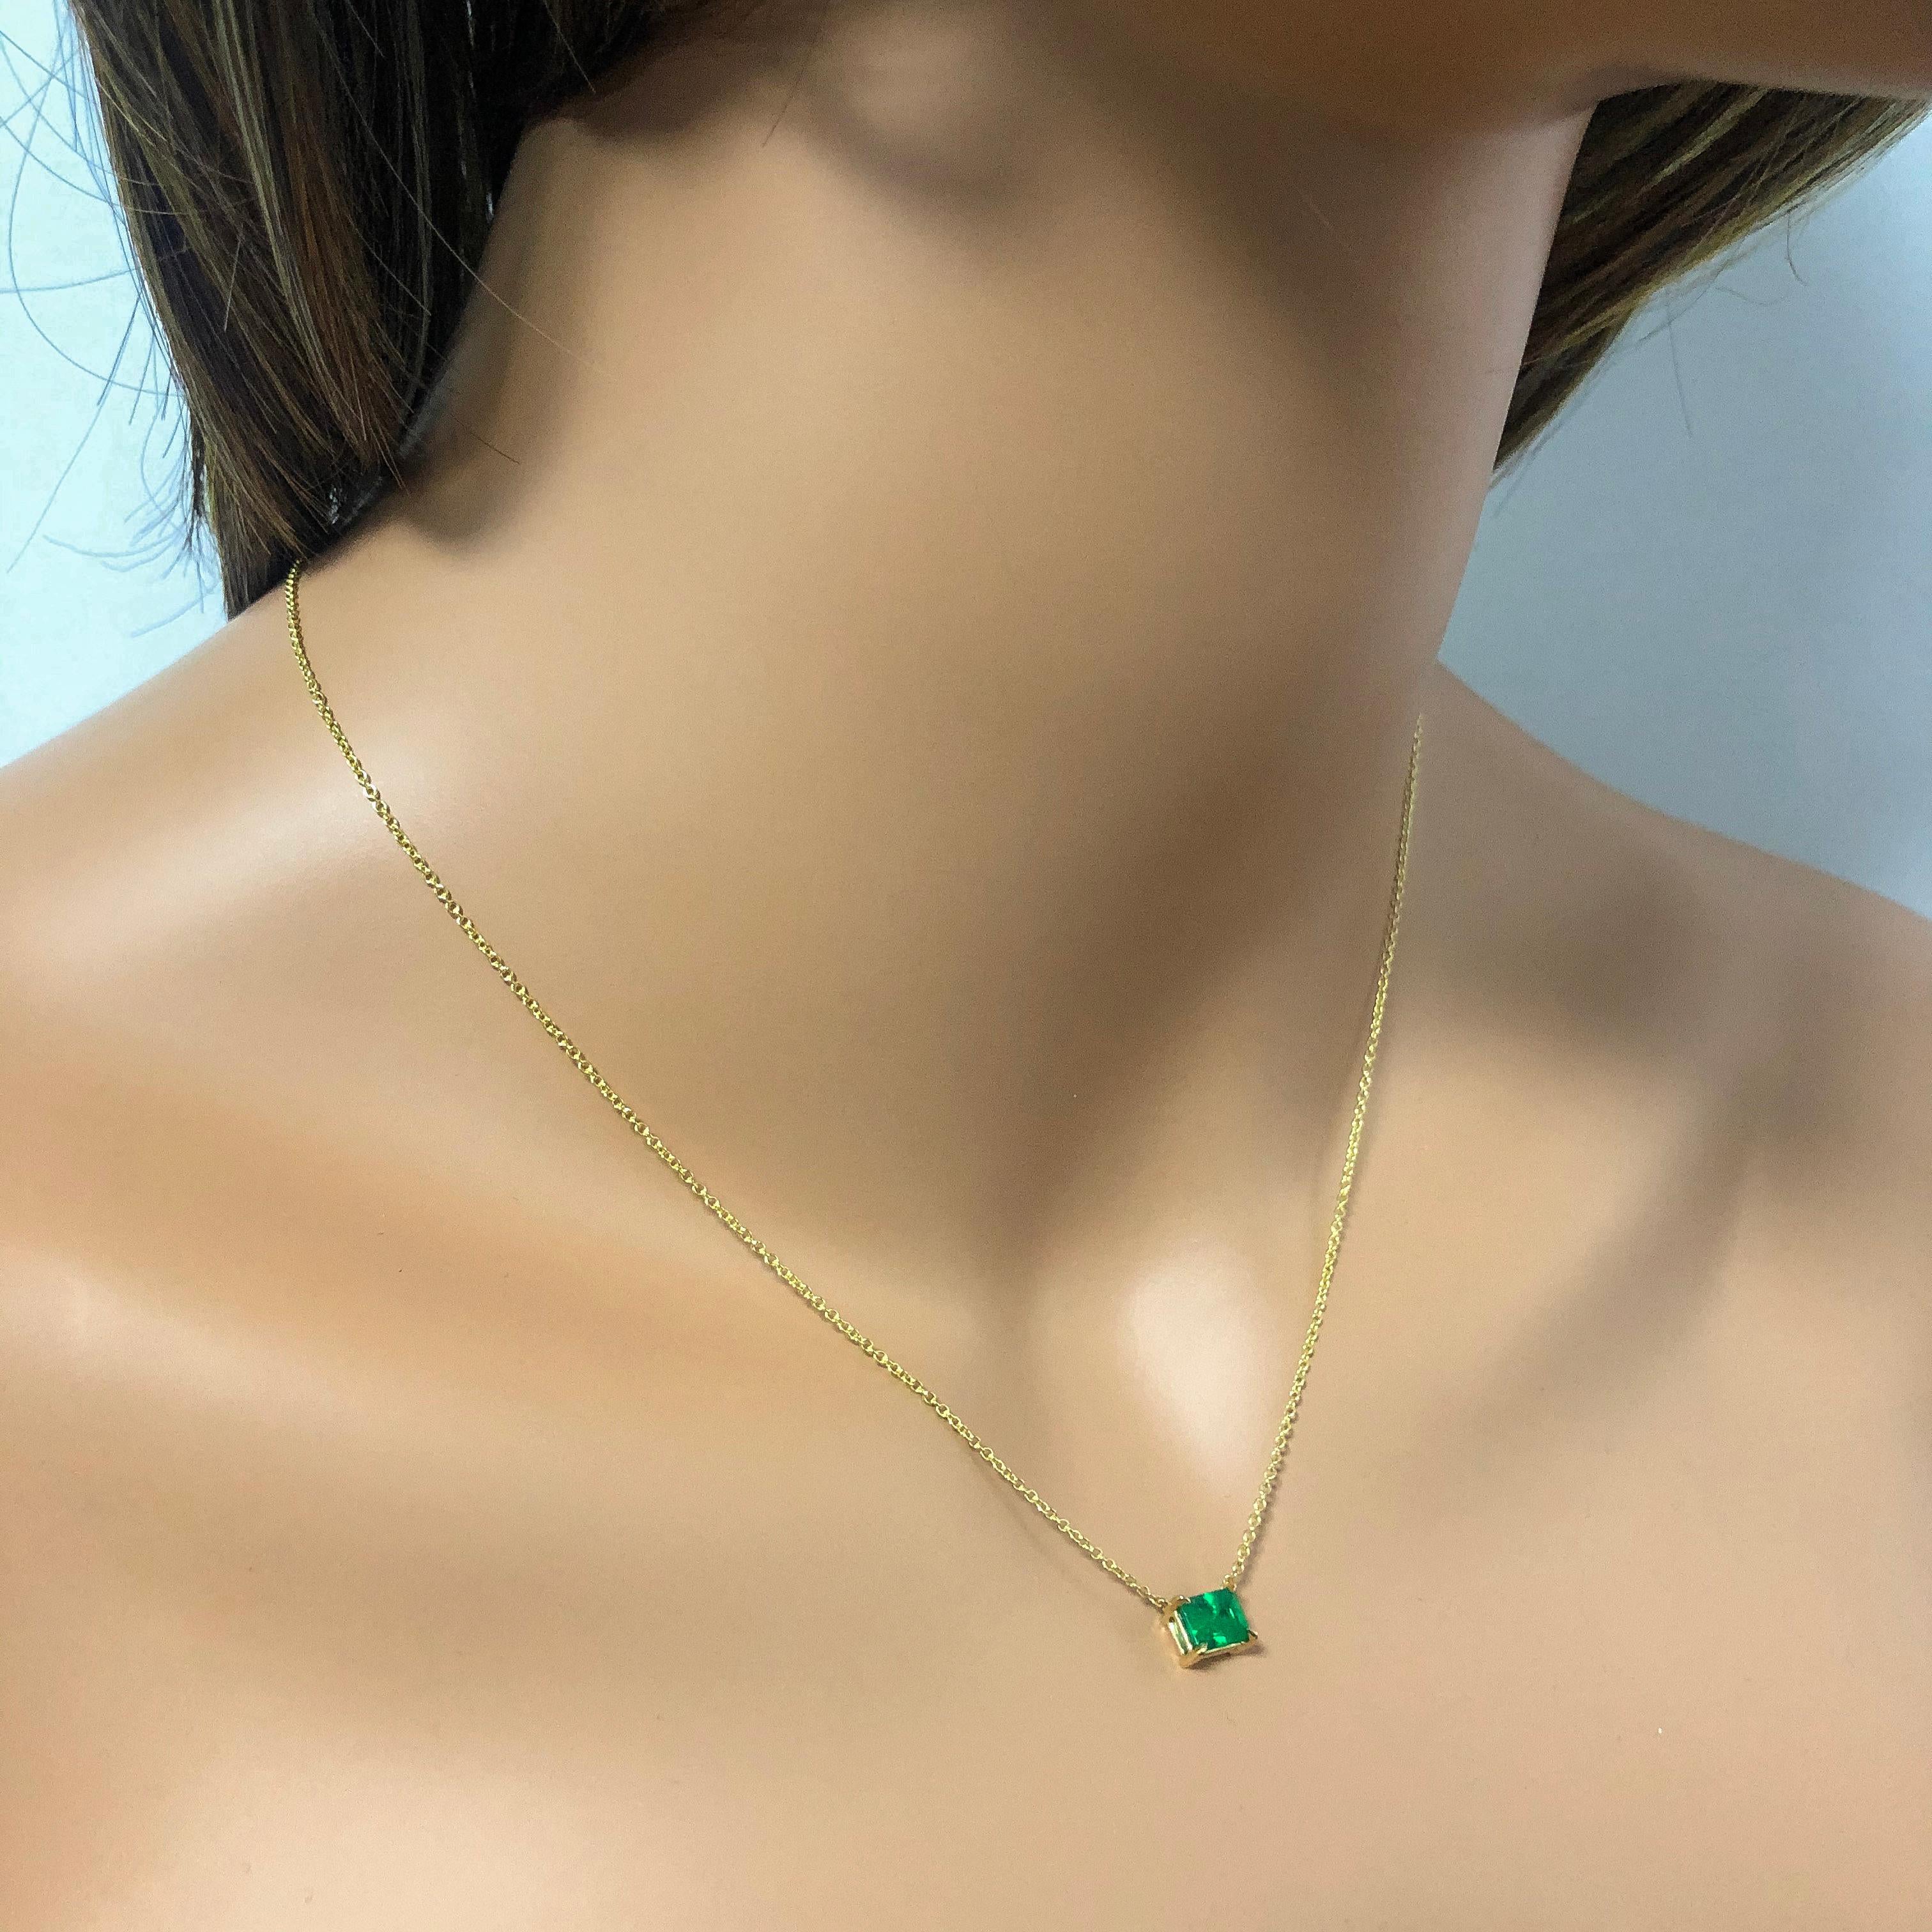 Contemporary Roman Malakov 1.04 Carat Green Emerald Solitaire Pendant Necklace